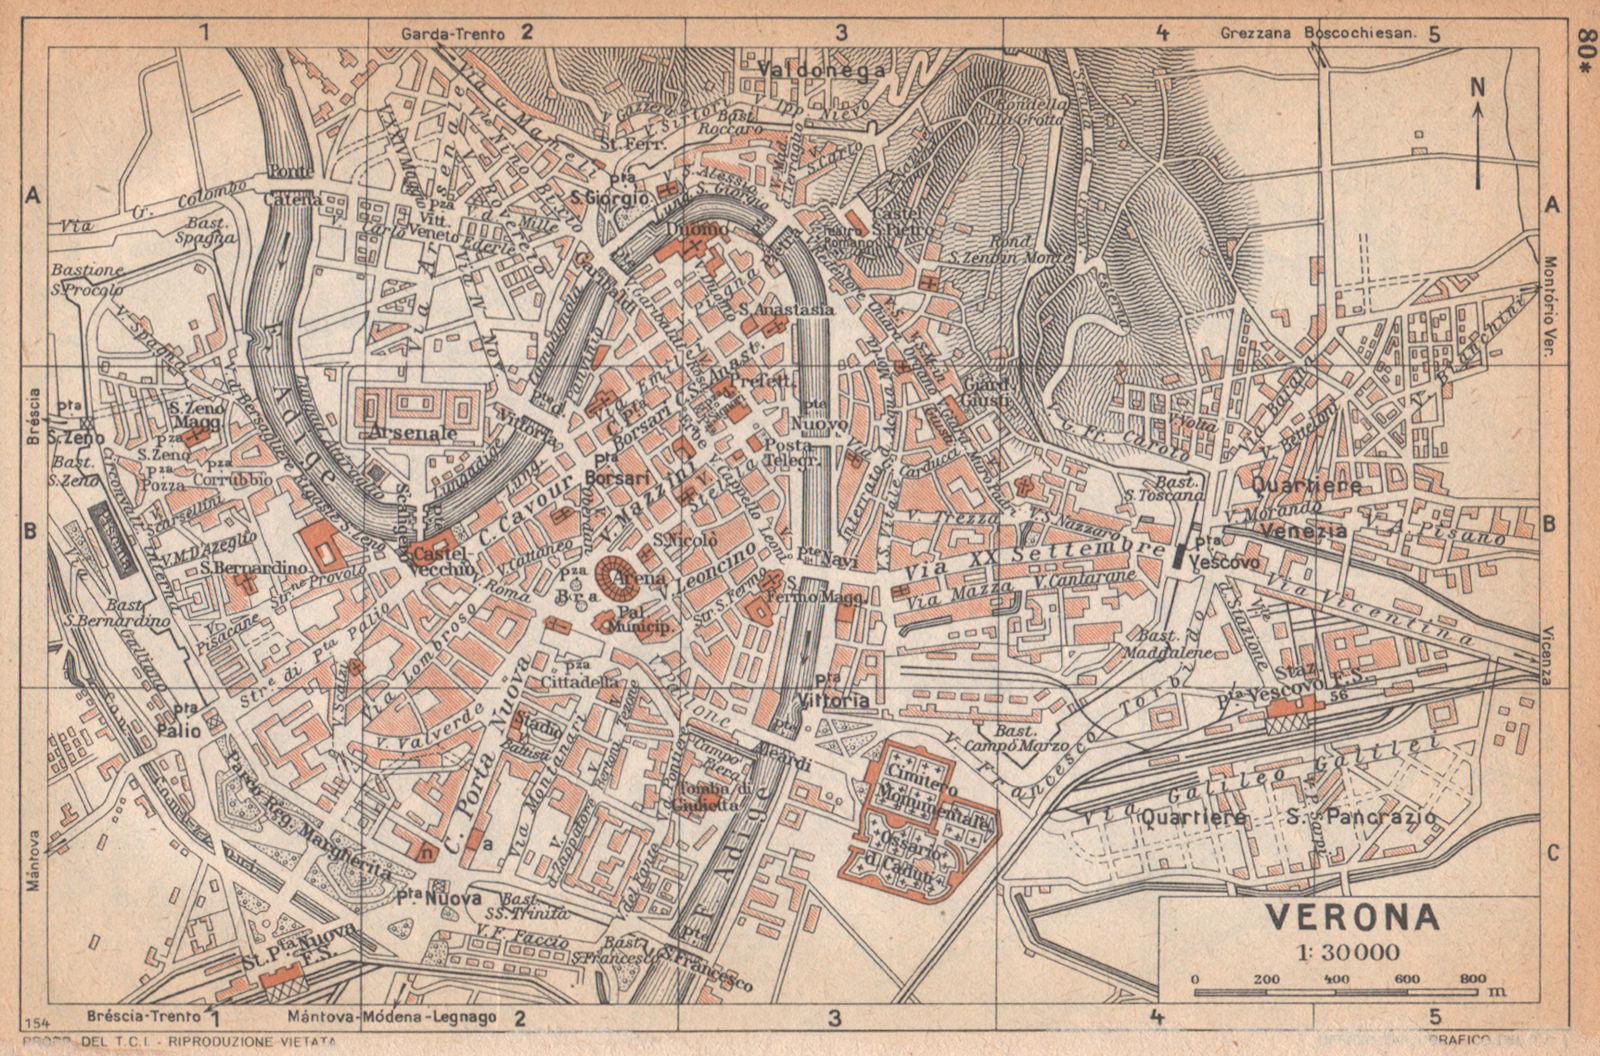 Associate Product VERONA vintage town city map plan pianta della città. Italy 1958 old